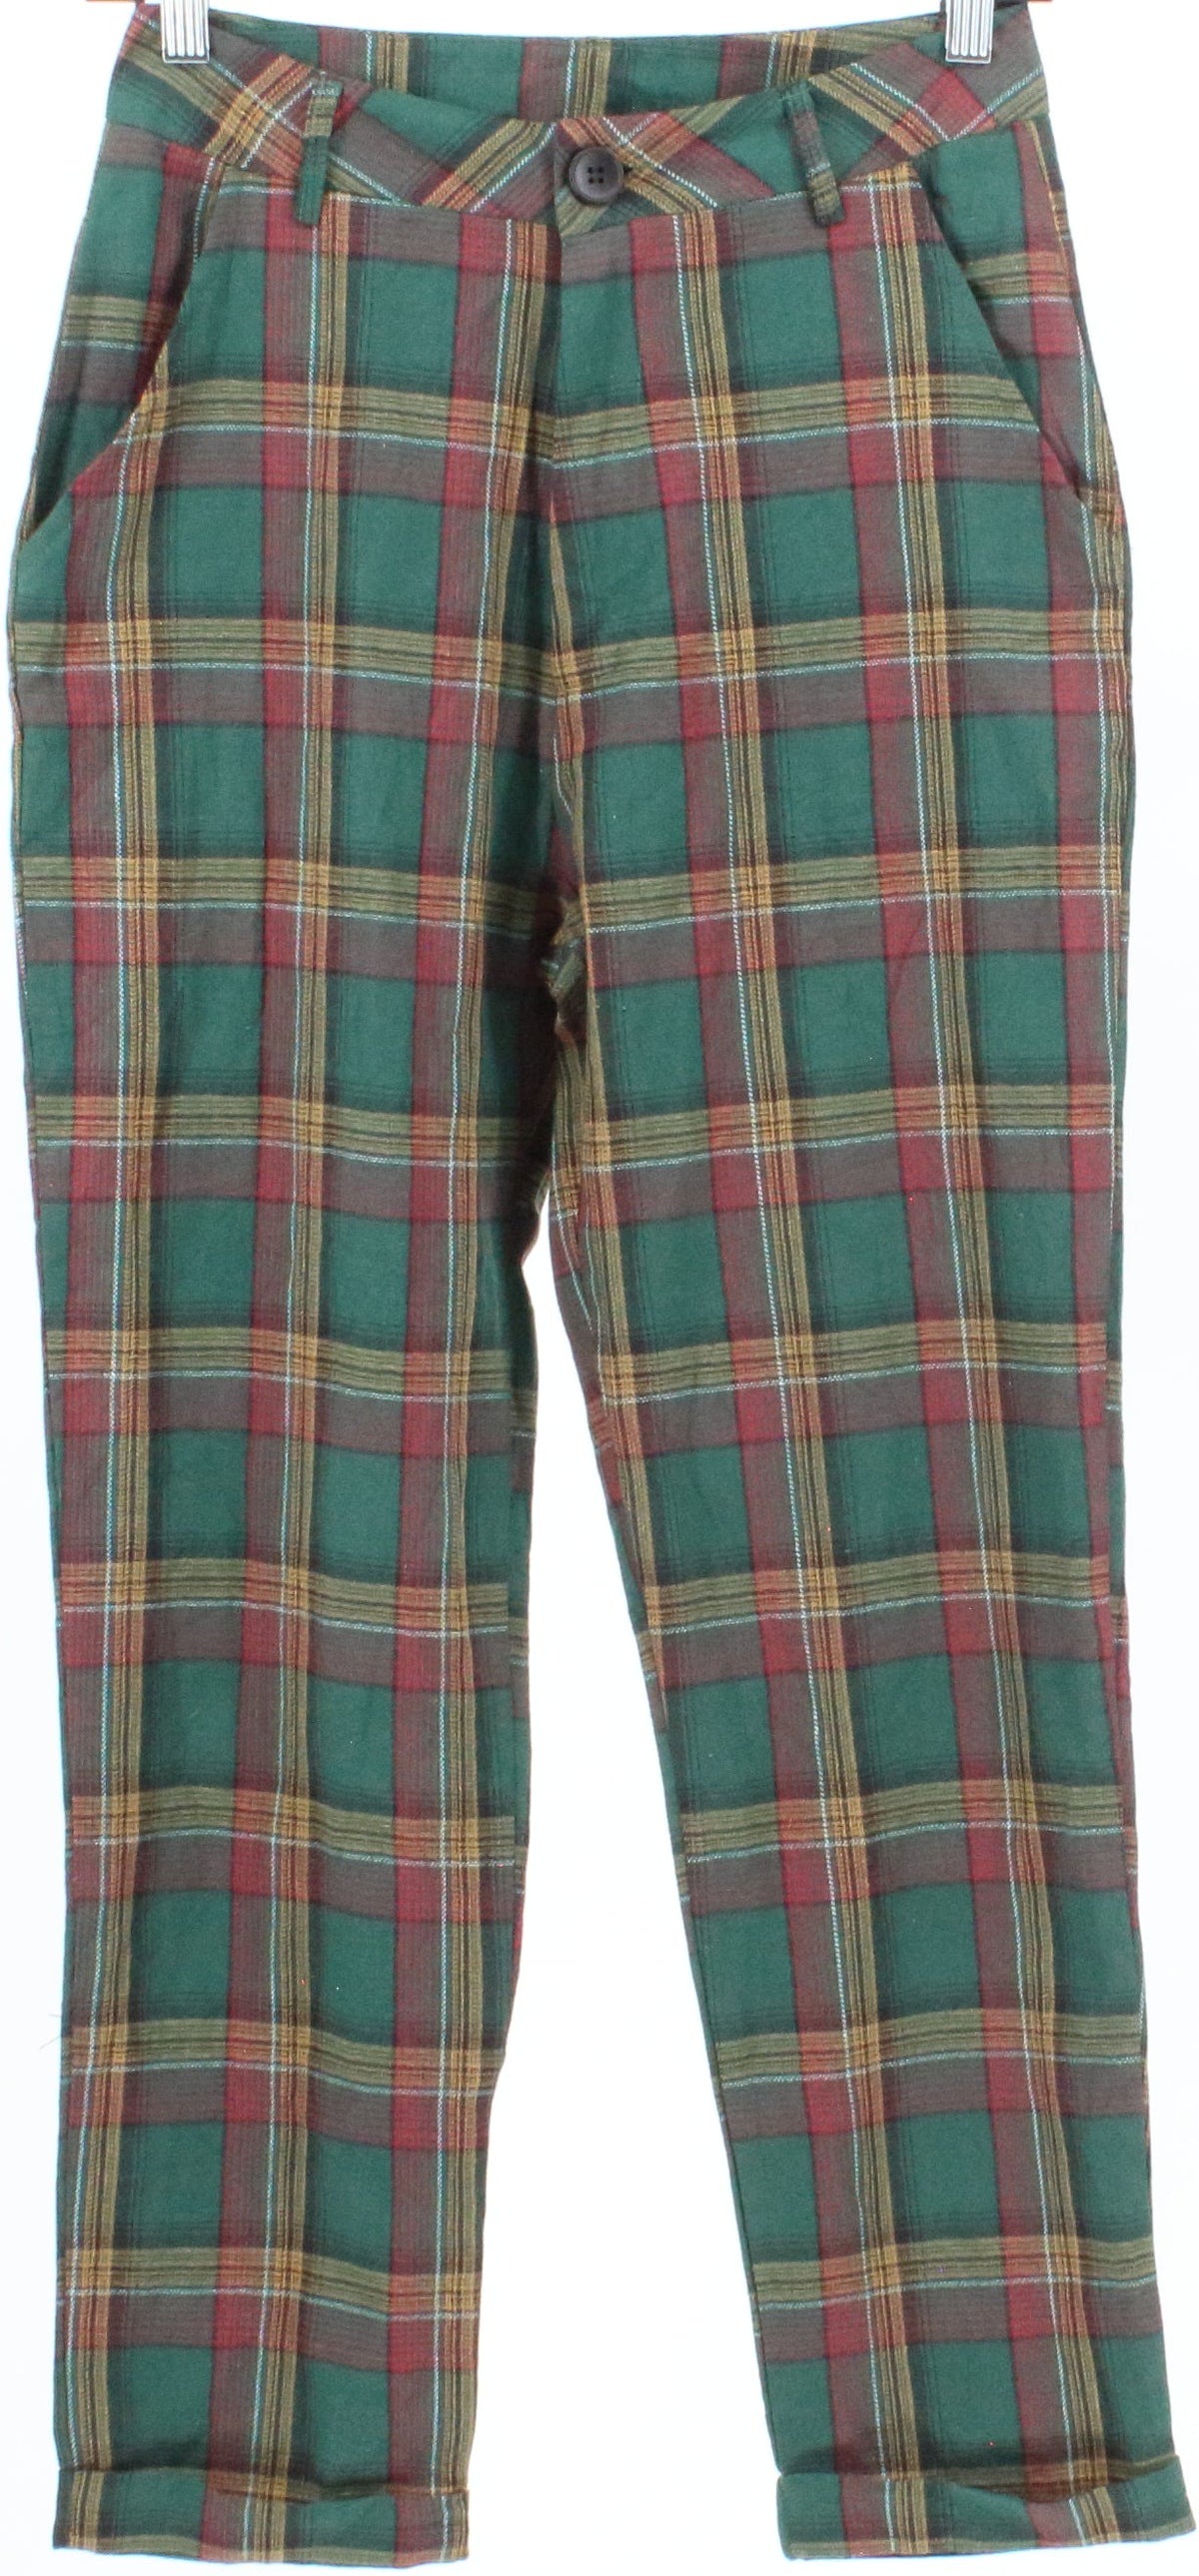 Shein Green Plaid Pants